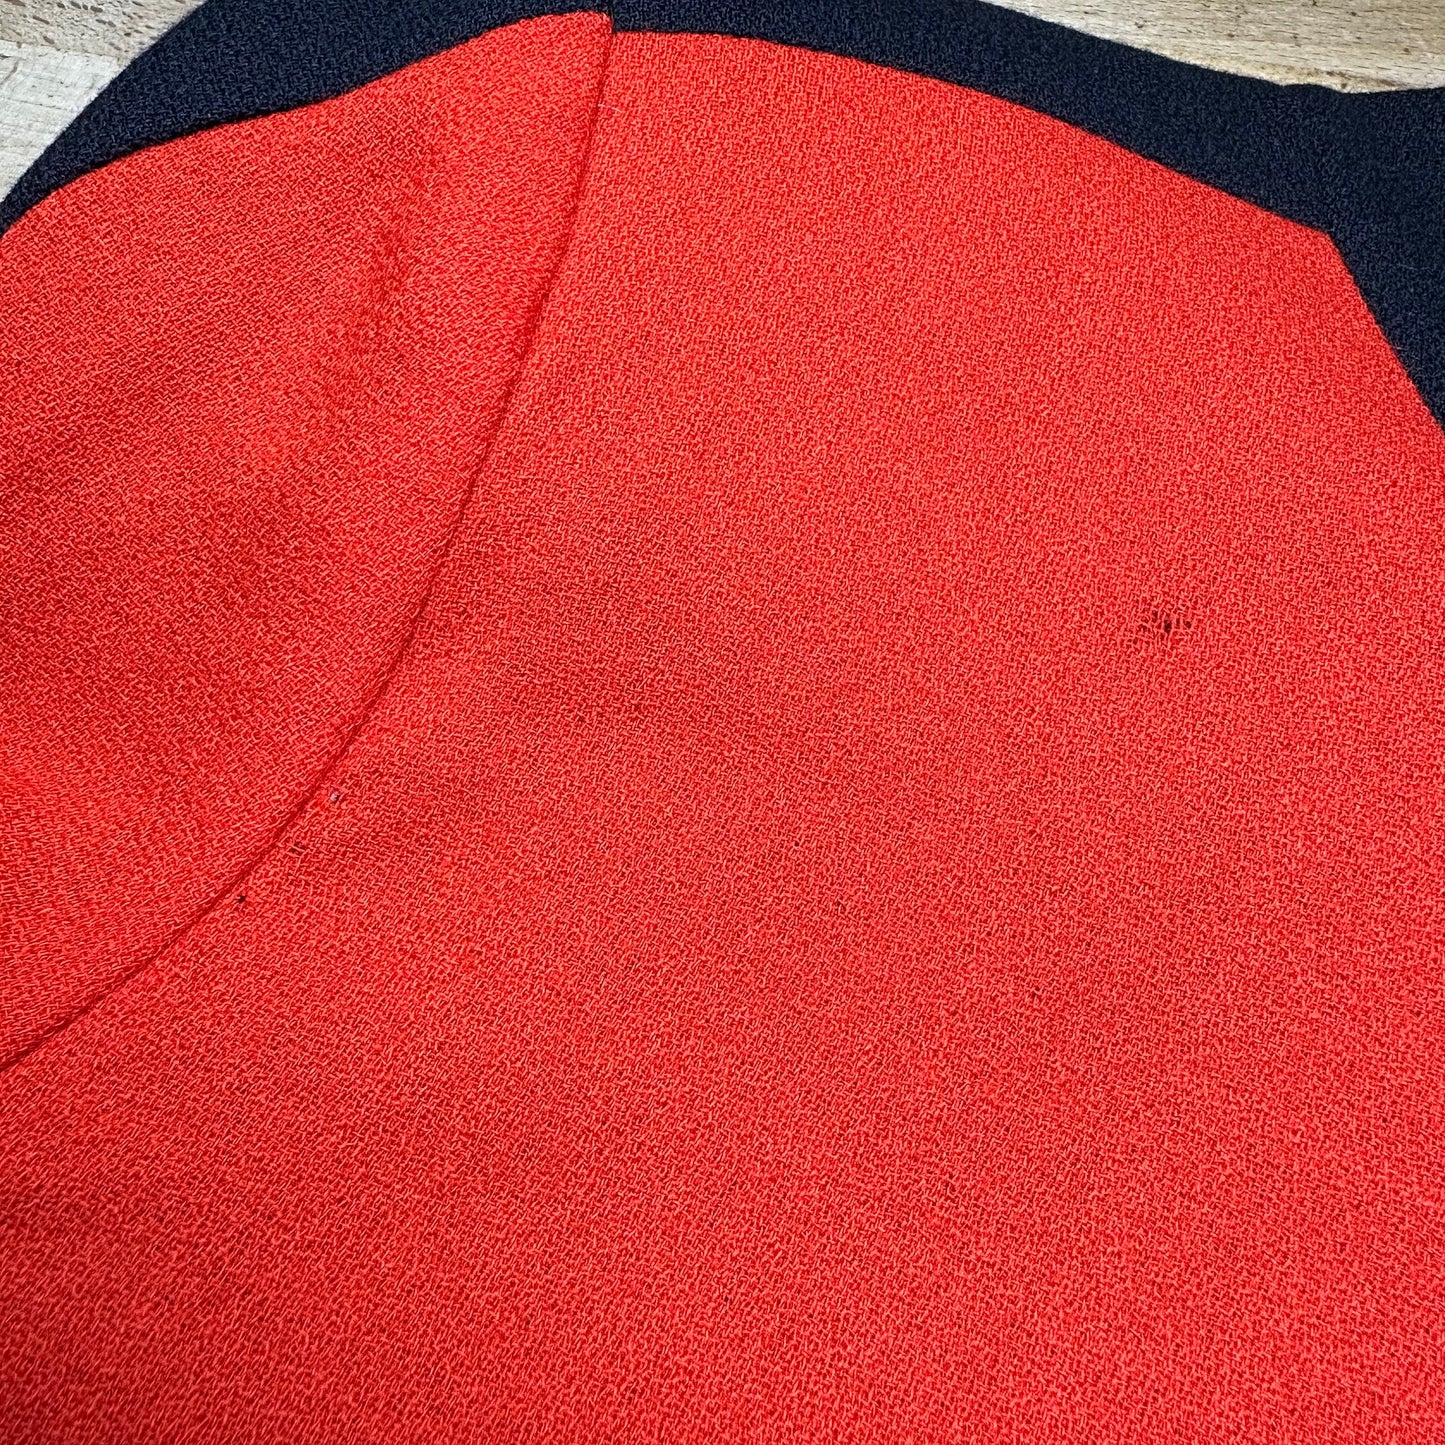 Medium 80s Hot Pink & Orange Color Block Wool Dress | Vintage Long Sleeve Button Up Midi Sweater Dress